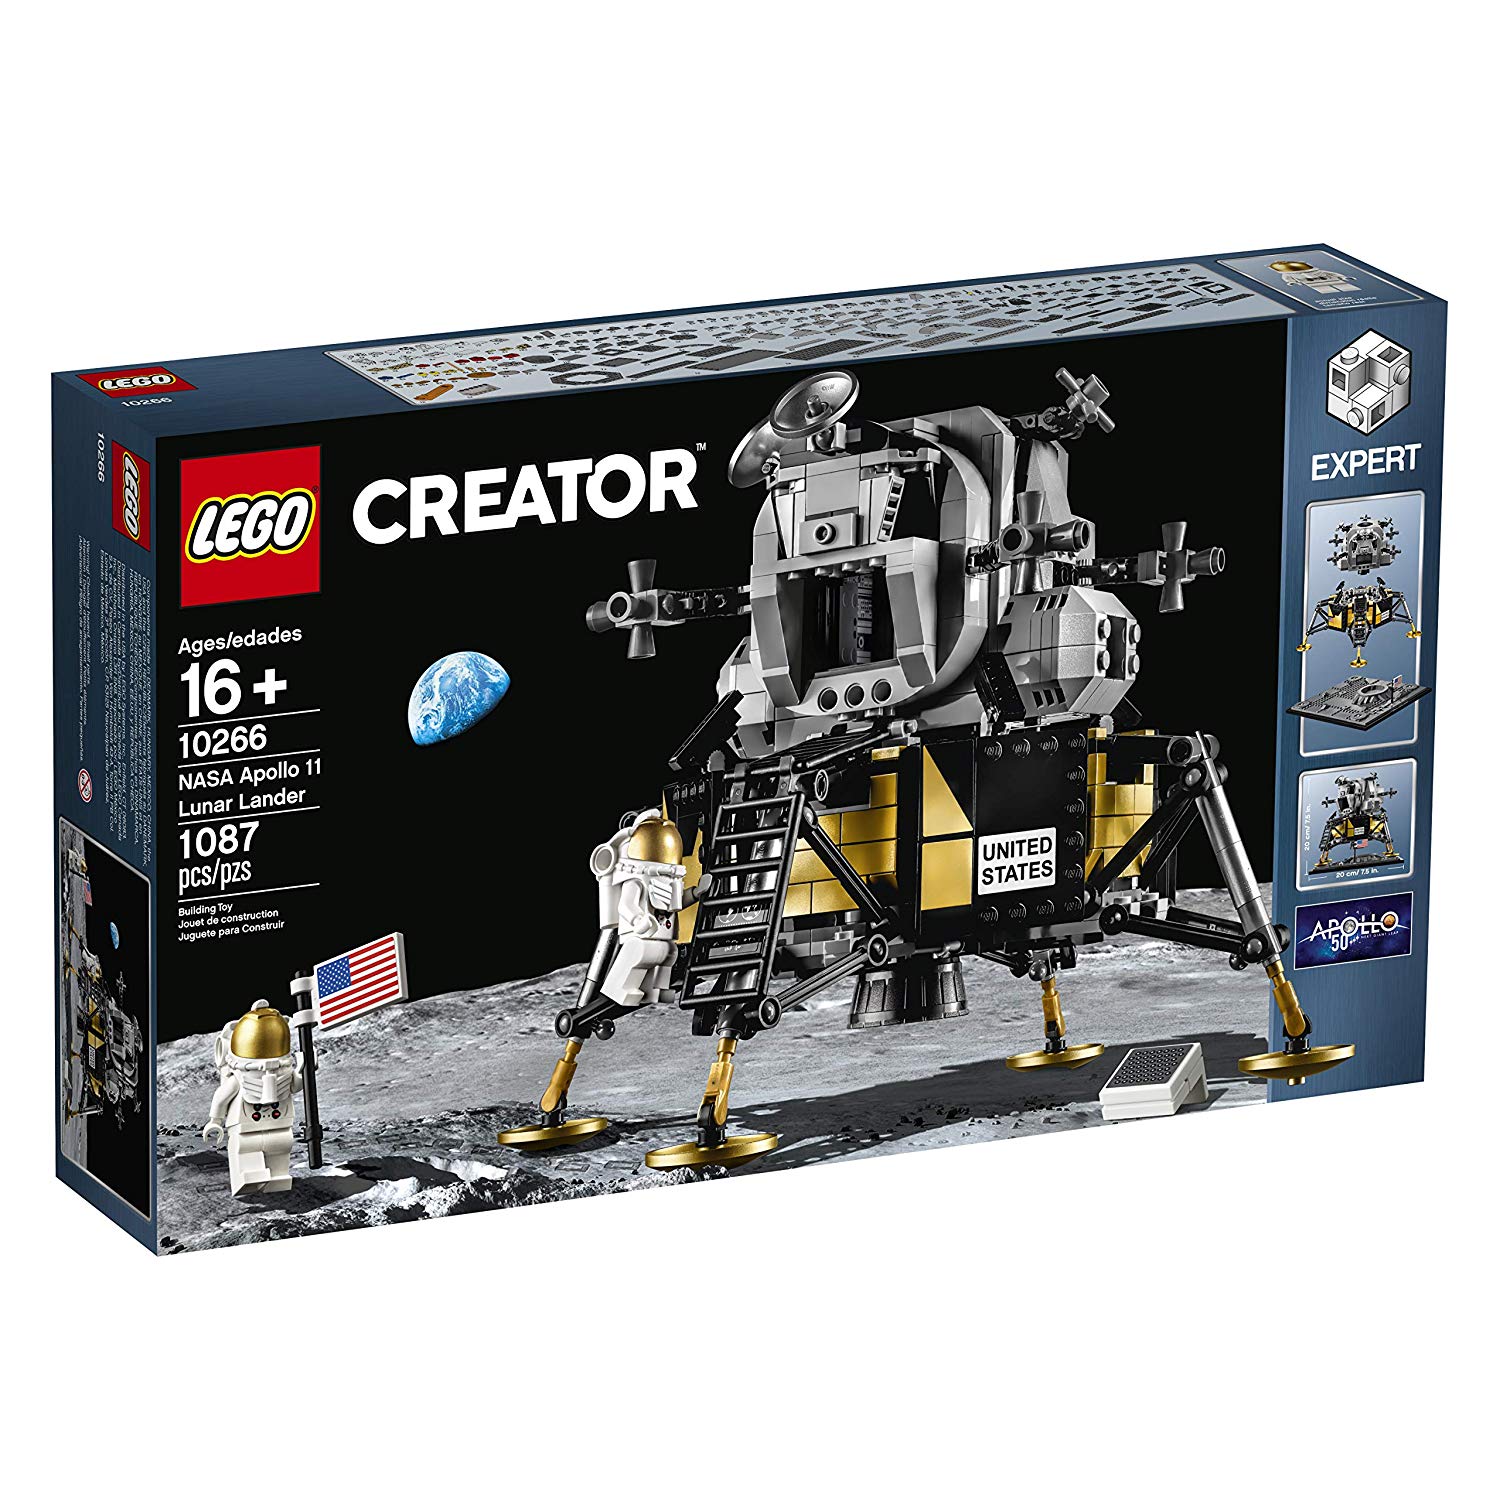 LEGO 樂高積木 Creator Expert系列 10266 NASA 阿波羅11號登月小艇